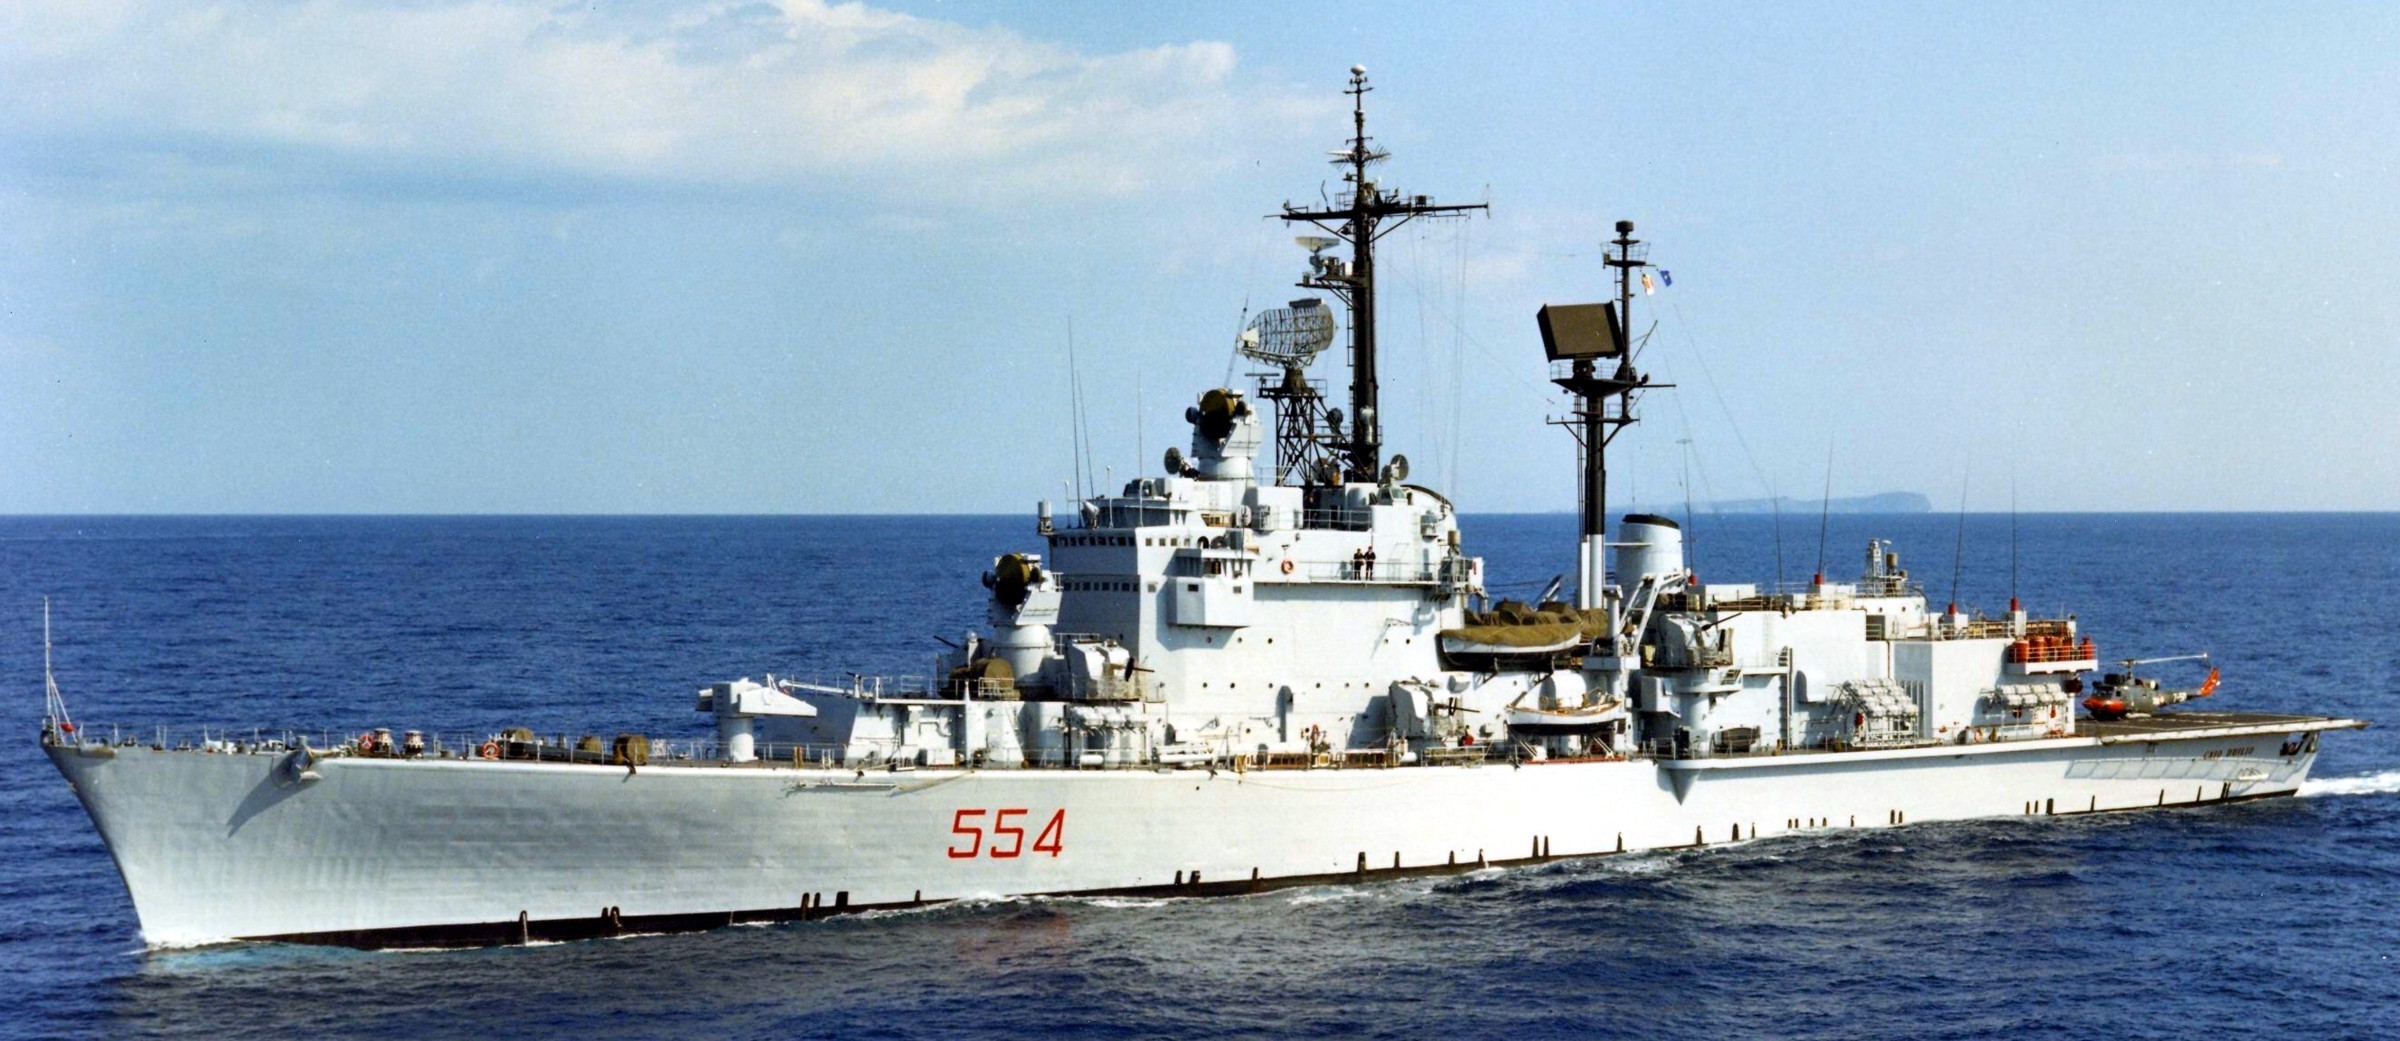 c-554 caio duilio guided missile helicopter cruiser italian navy andrea doria class nave marina militare 09